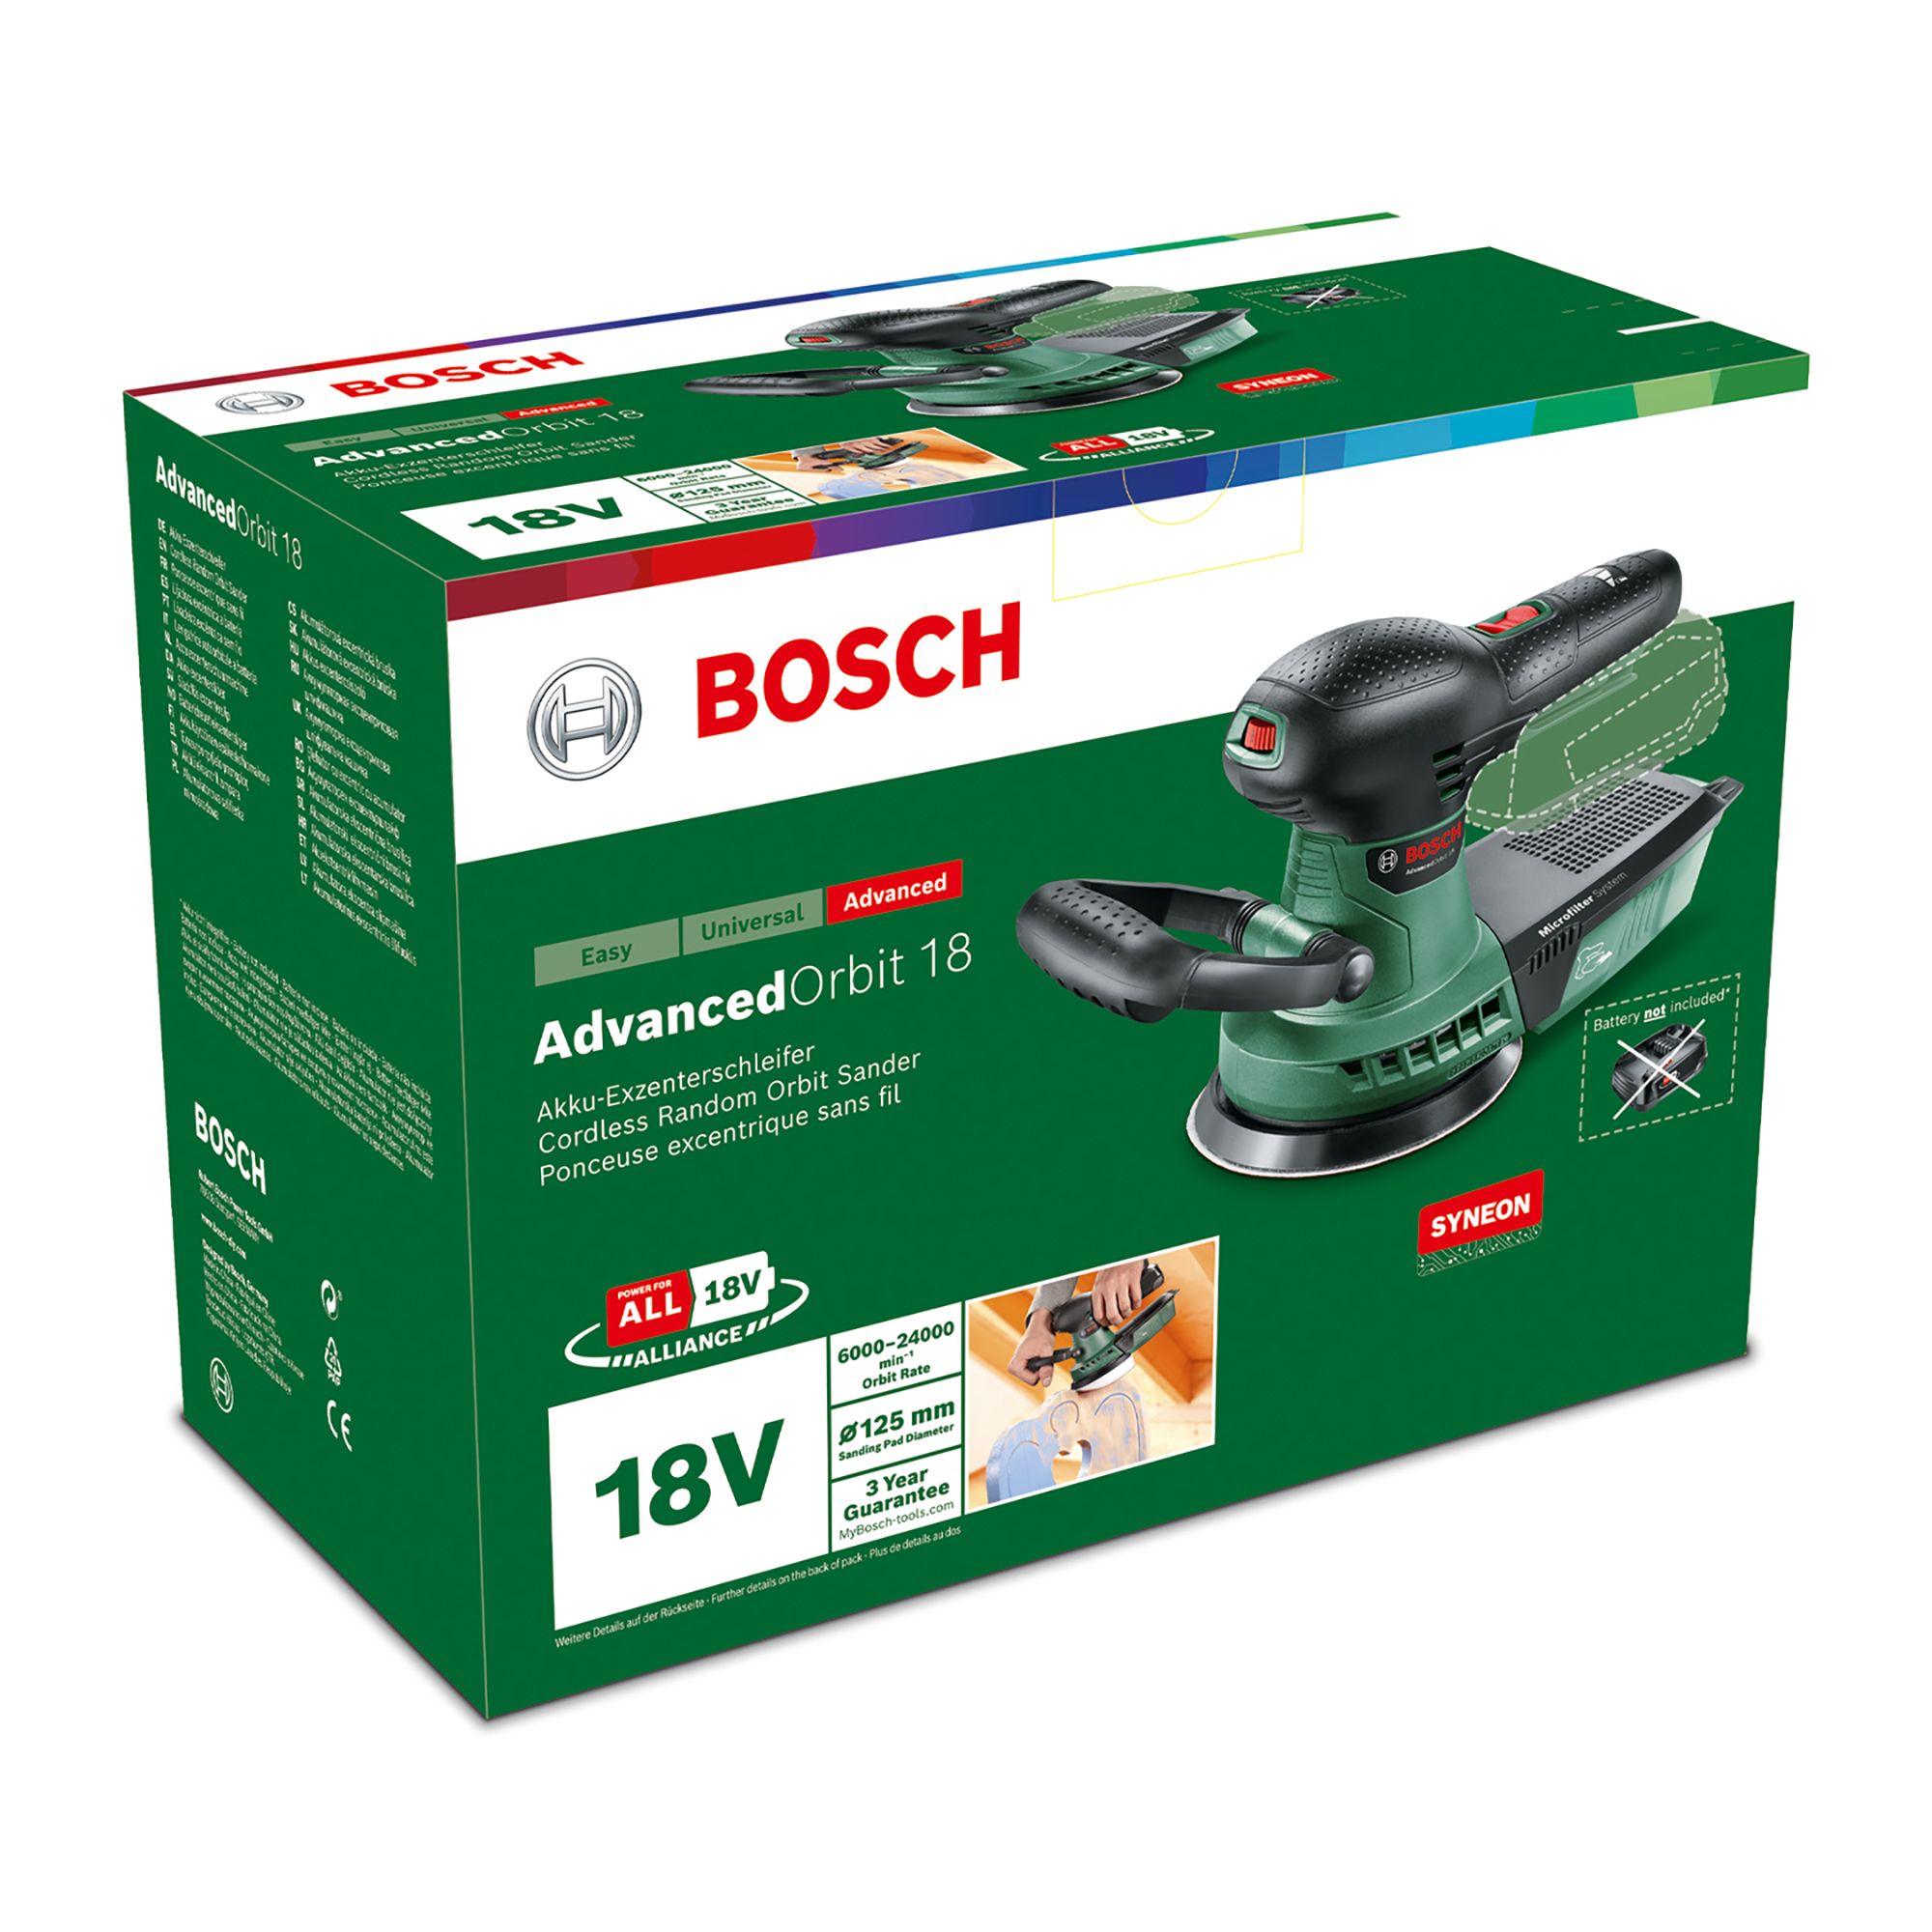 Bosch 18V Power for all 18V 125mm Li-ion Cordless Random orbit sander AdvancedOrbit 18 - Bare unit